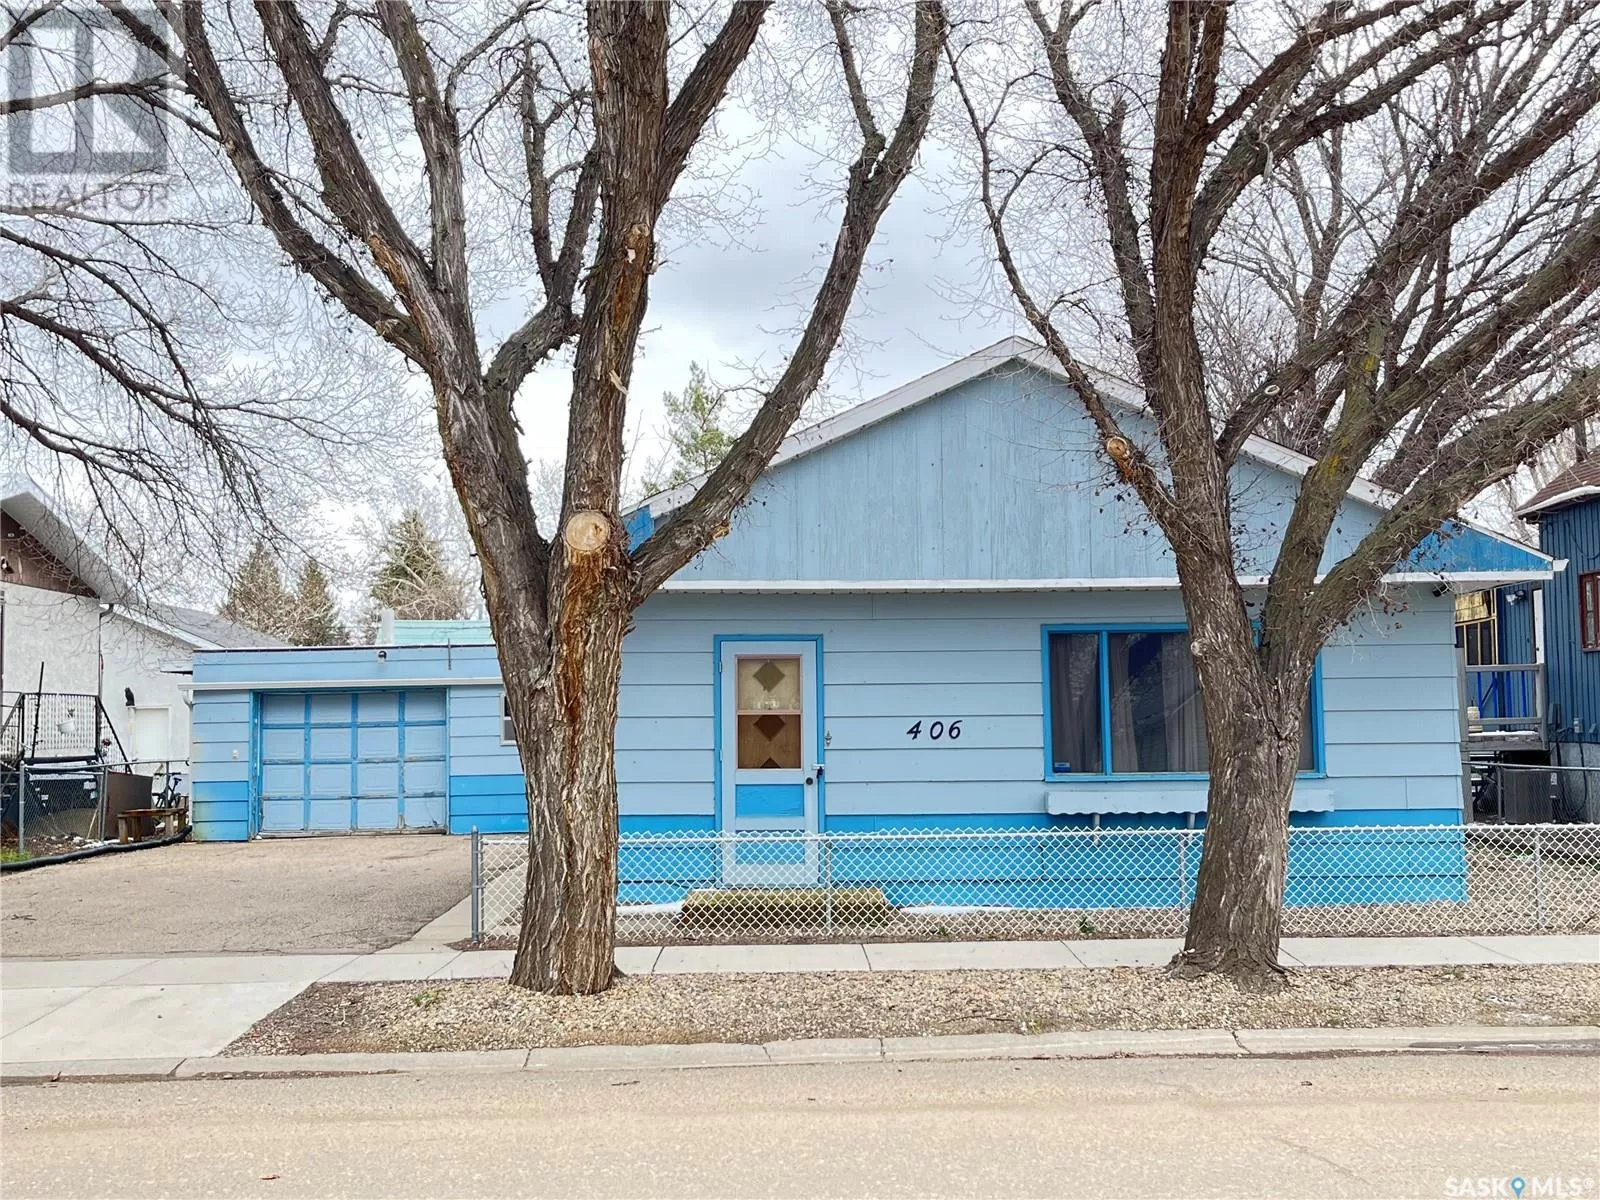 House for rent: 406 Sidney Street, Maple Creek, Saskatchewan S0N 1N0